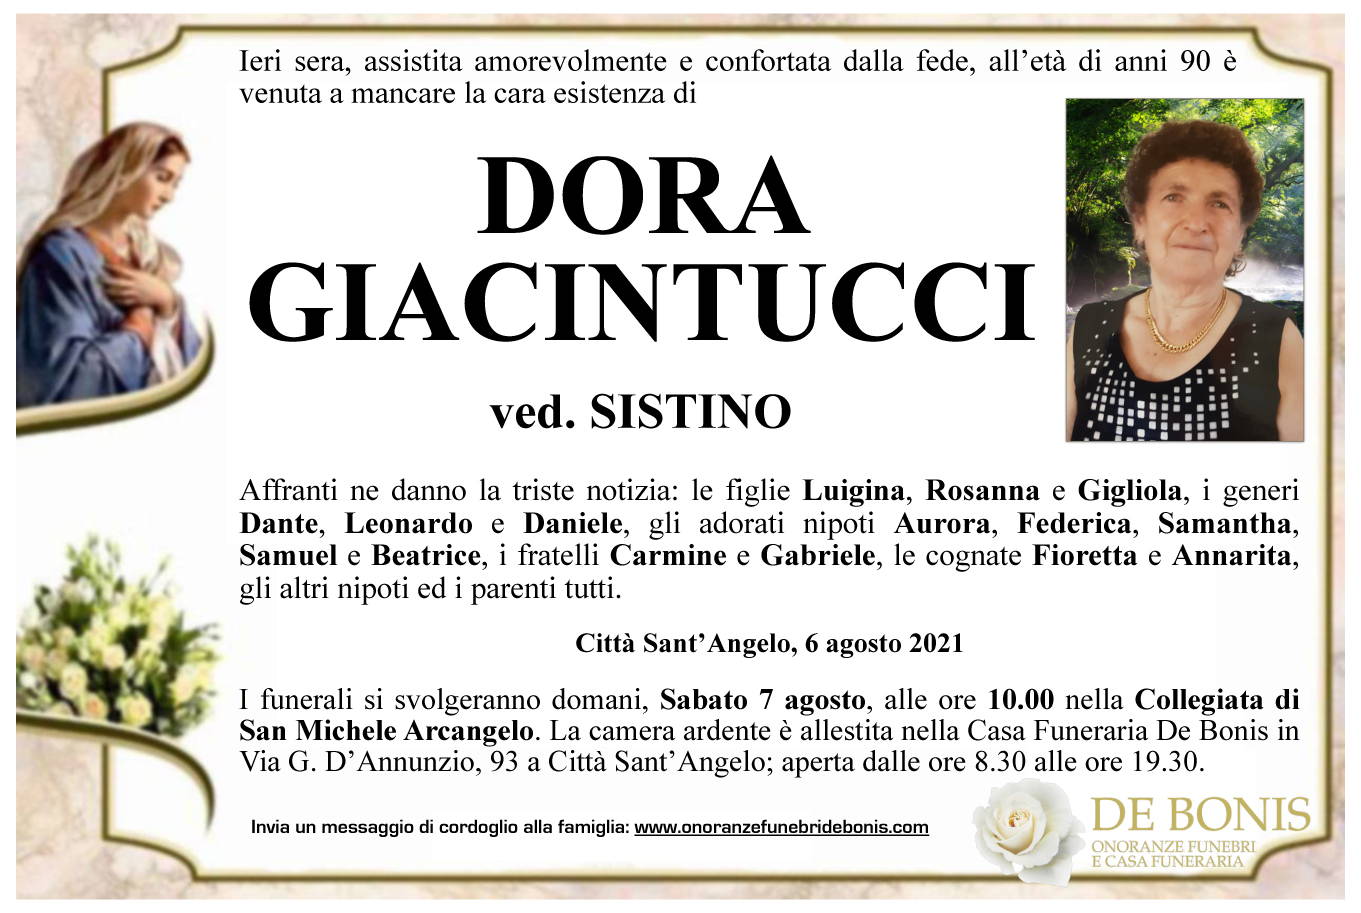 Dora Giacintucci